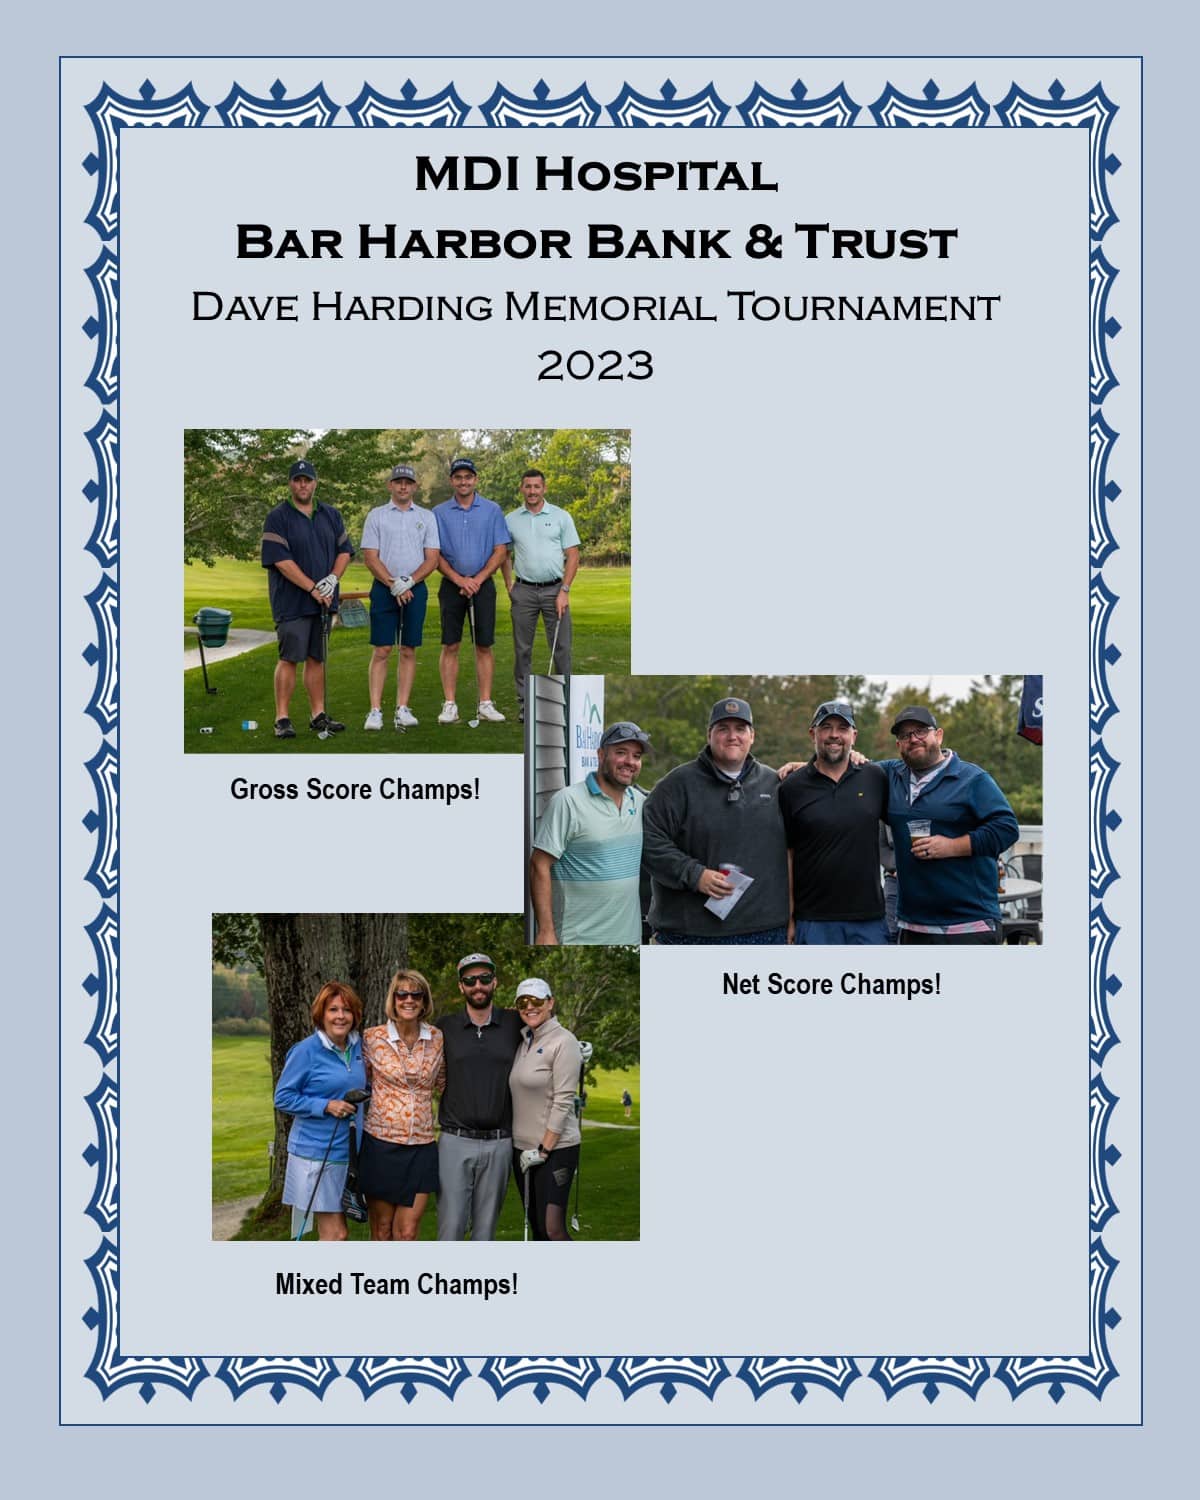 MDI Hospital & BHBT Dave Harding Memorial Tournament